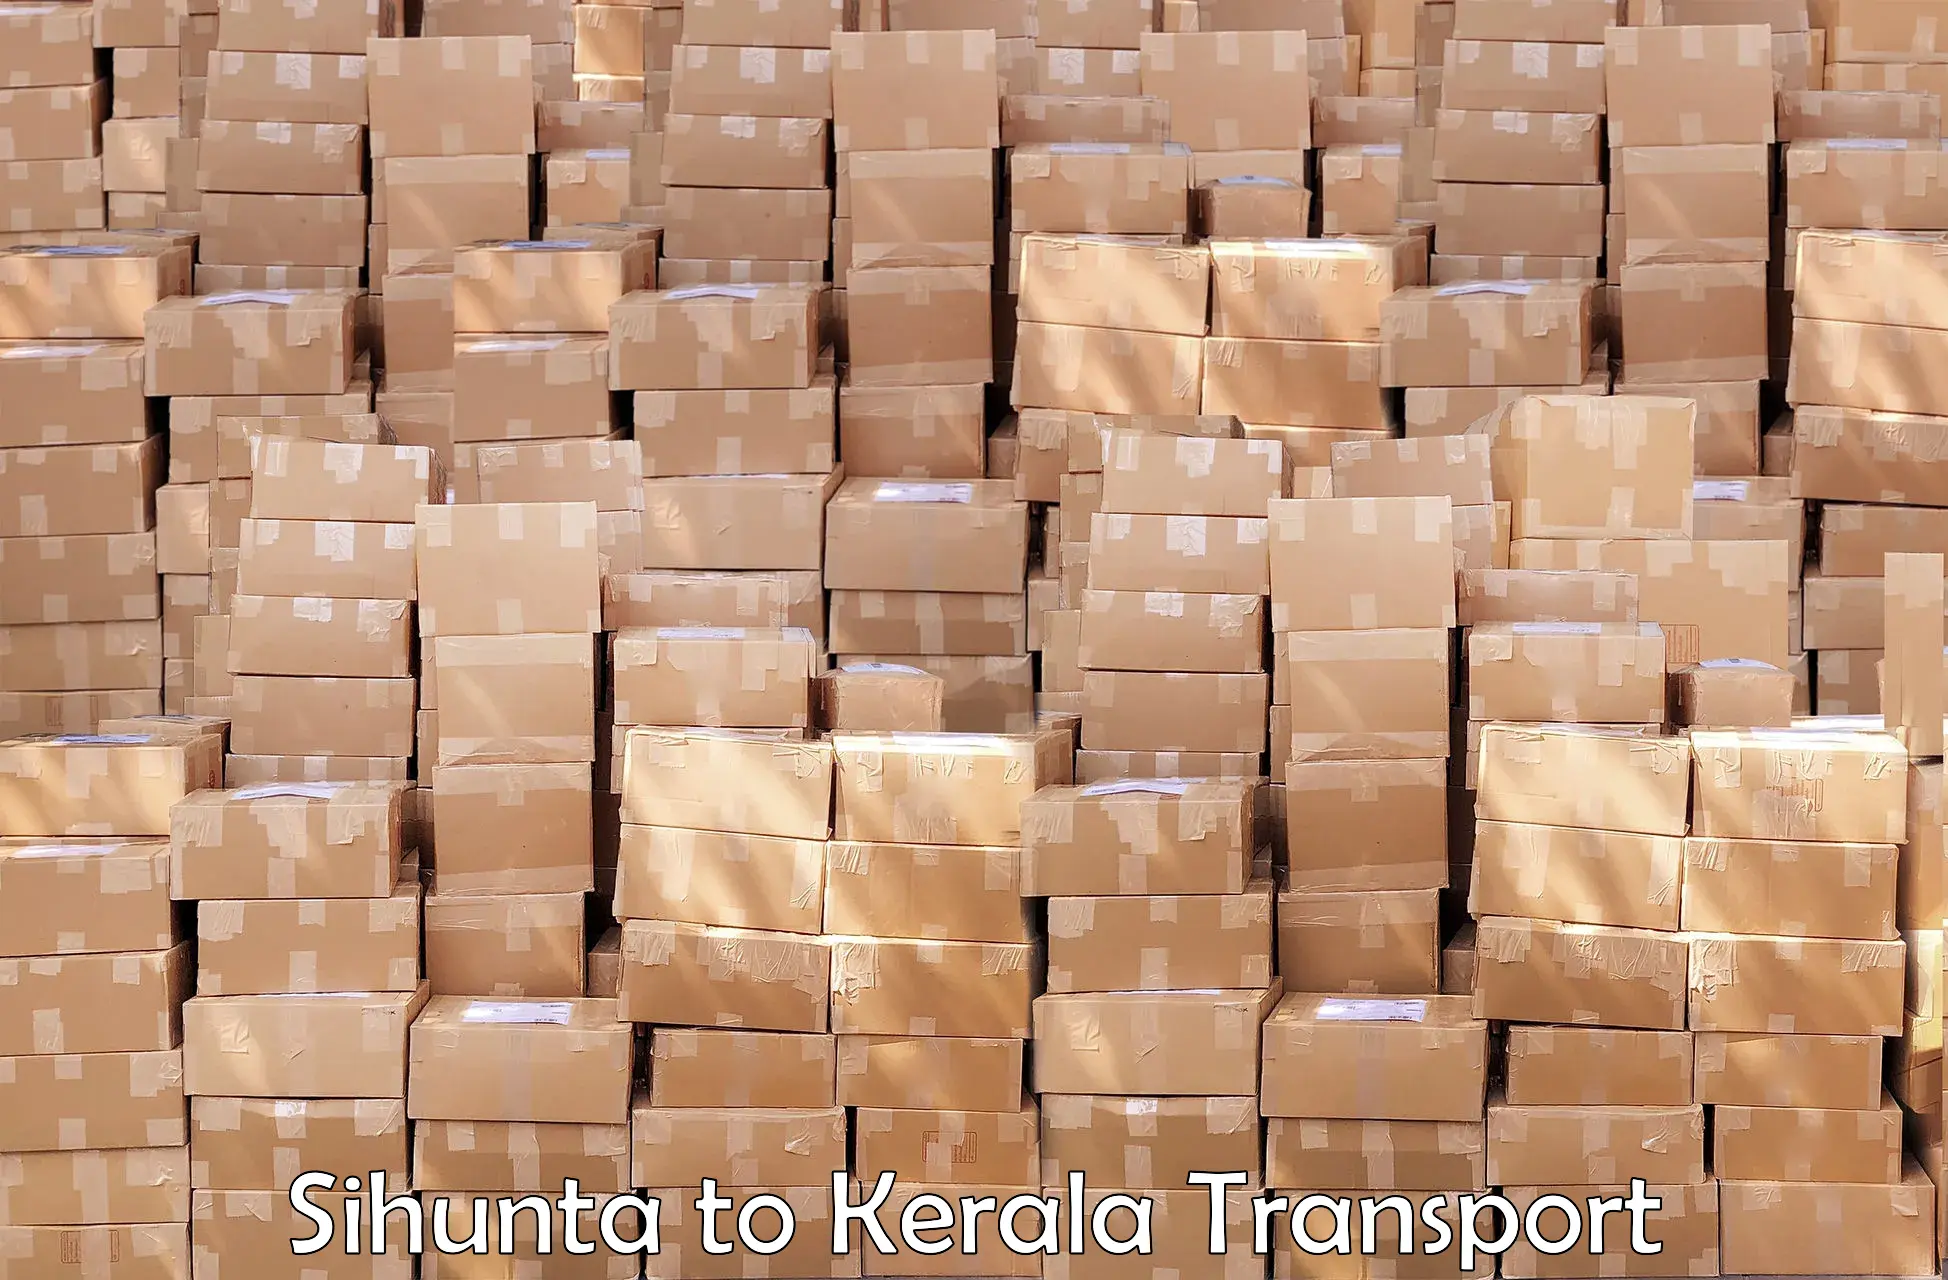 Shipping partner Sihunta to Kerala